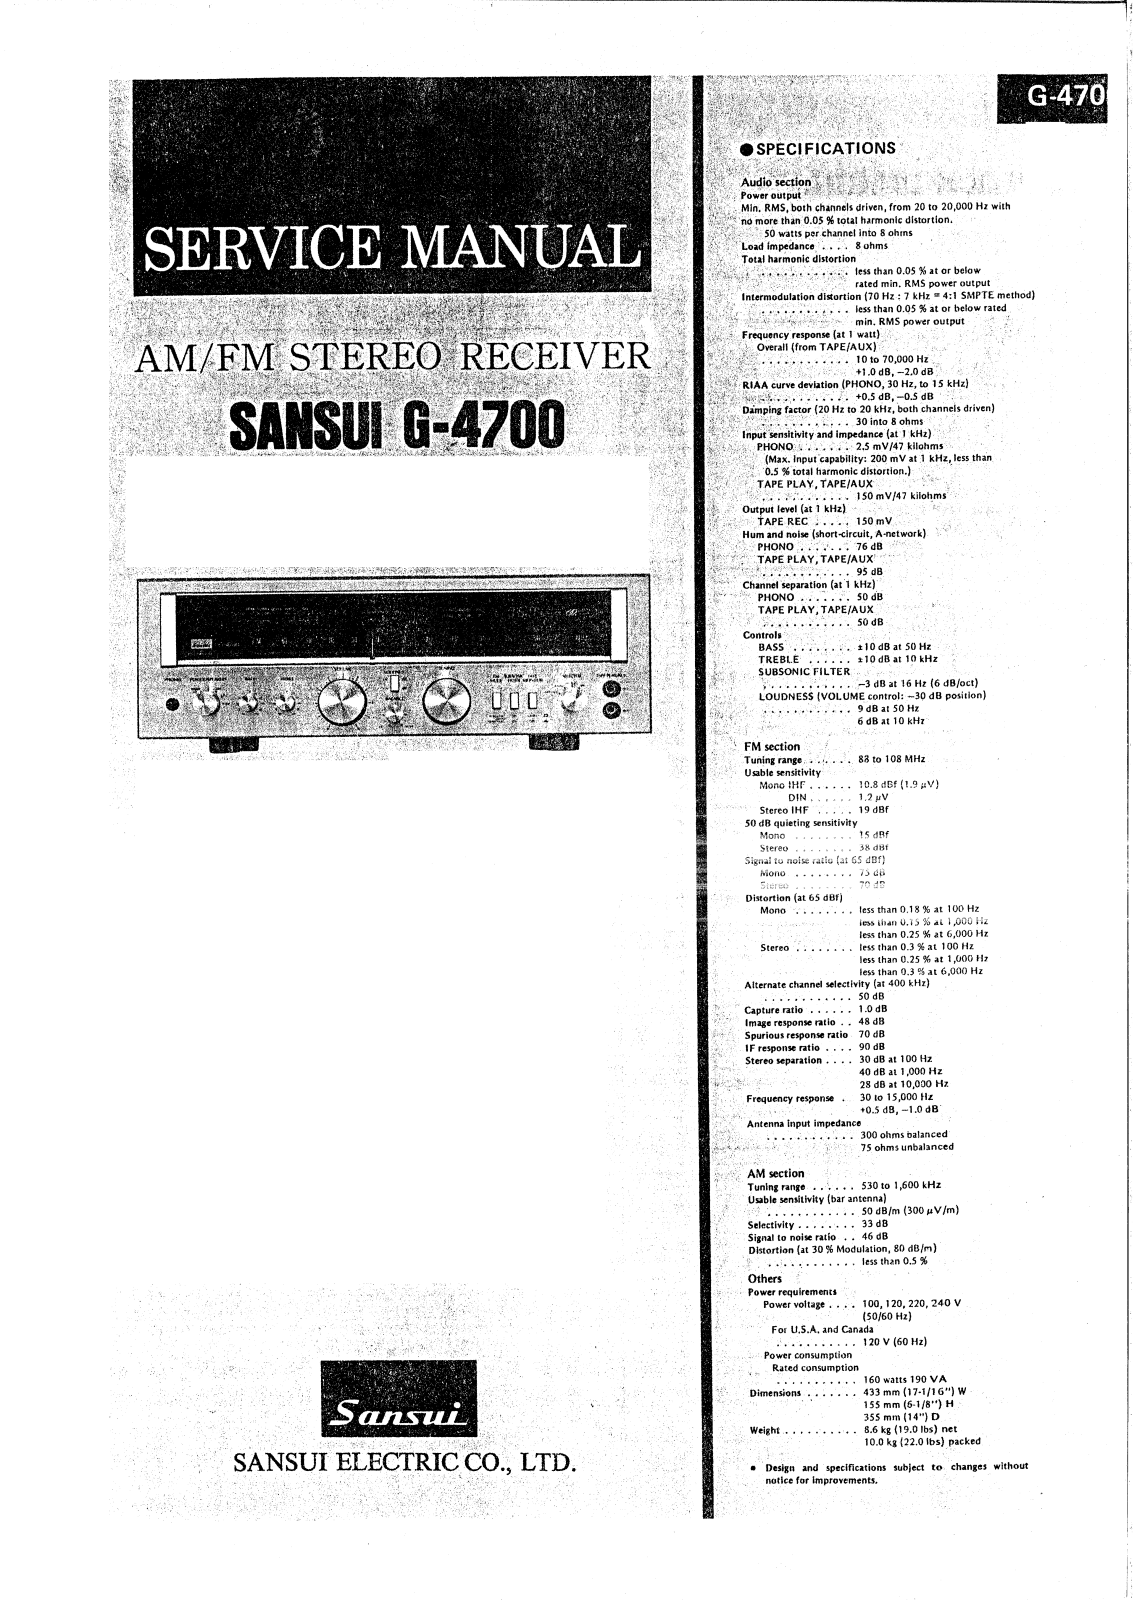 Sansui G-4700 Service manual